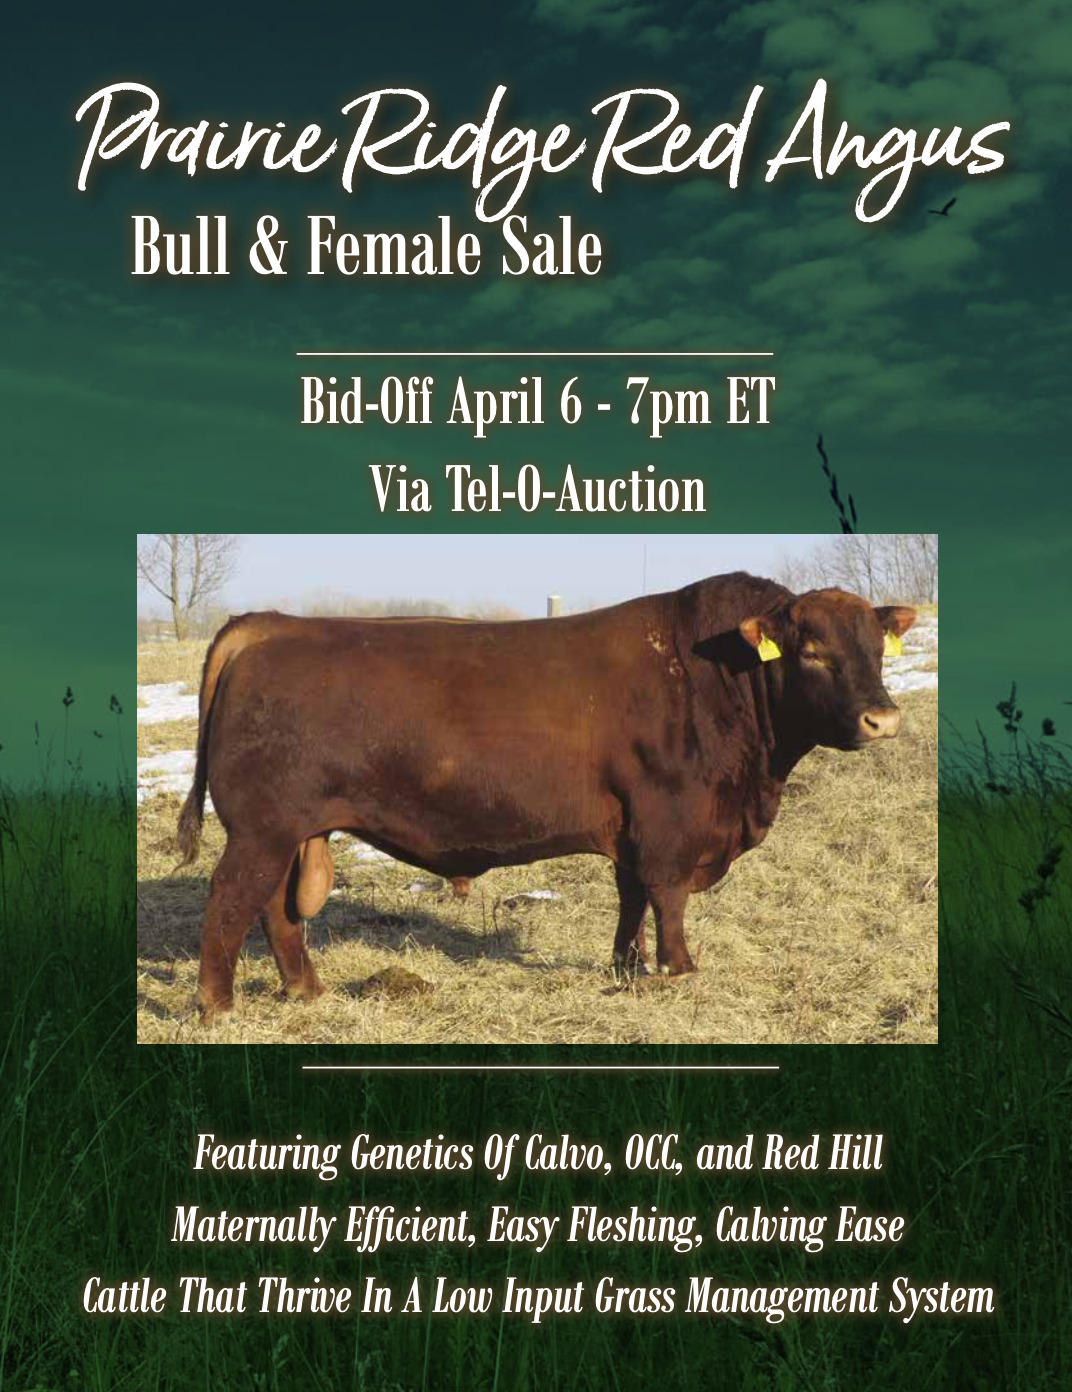 Prairie Ridge Red Angus Bull & Female Sale